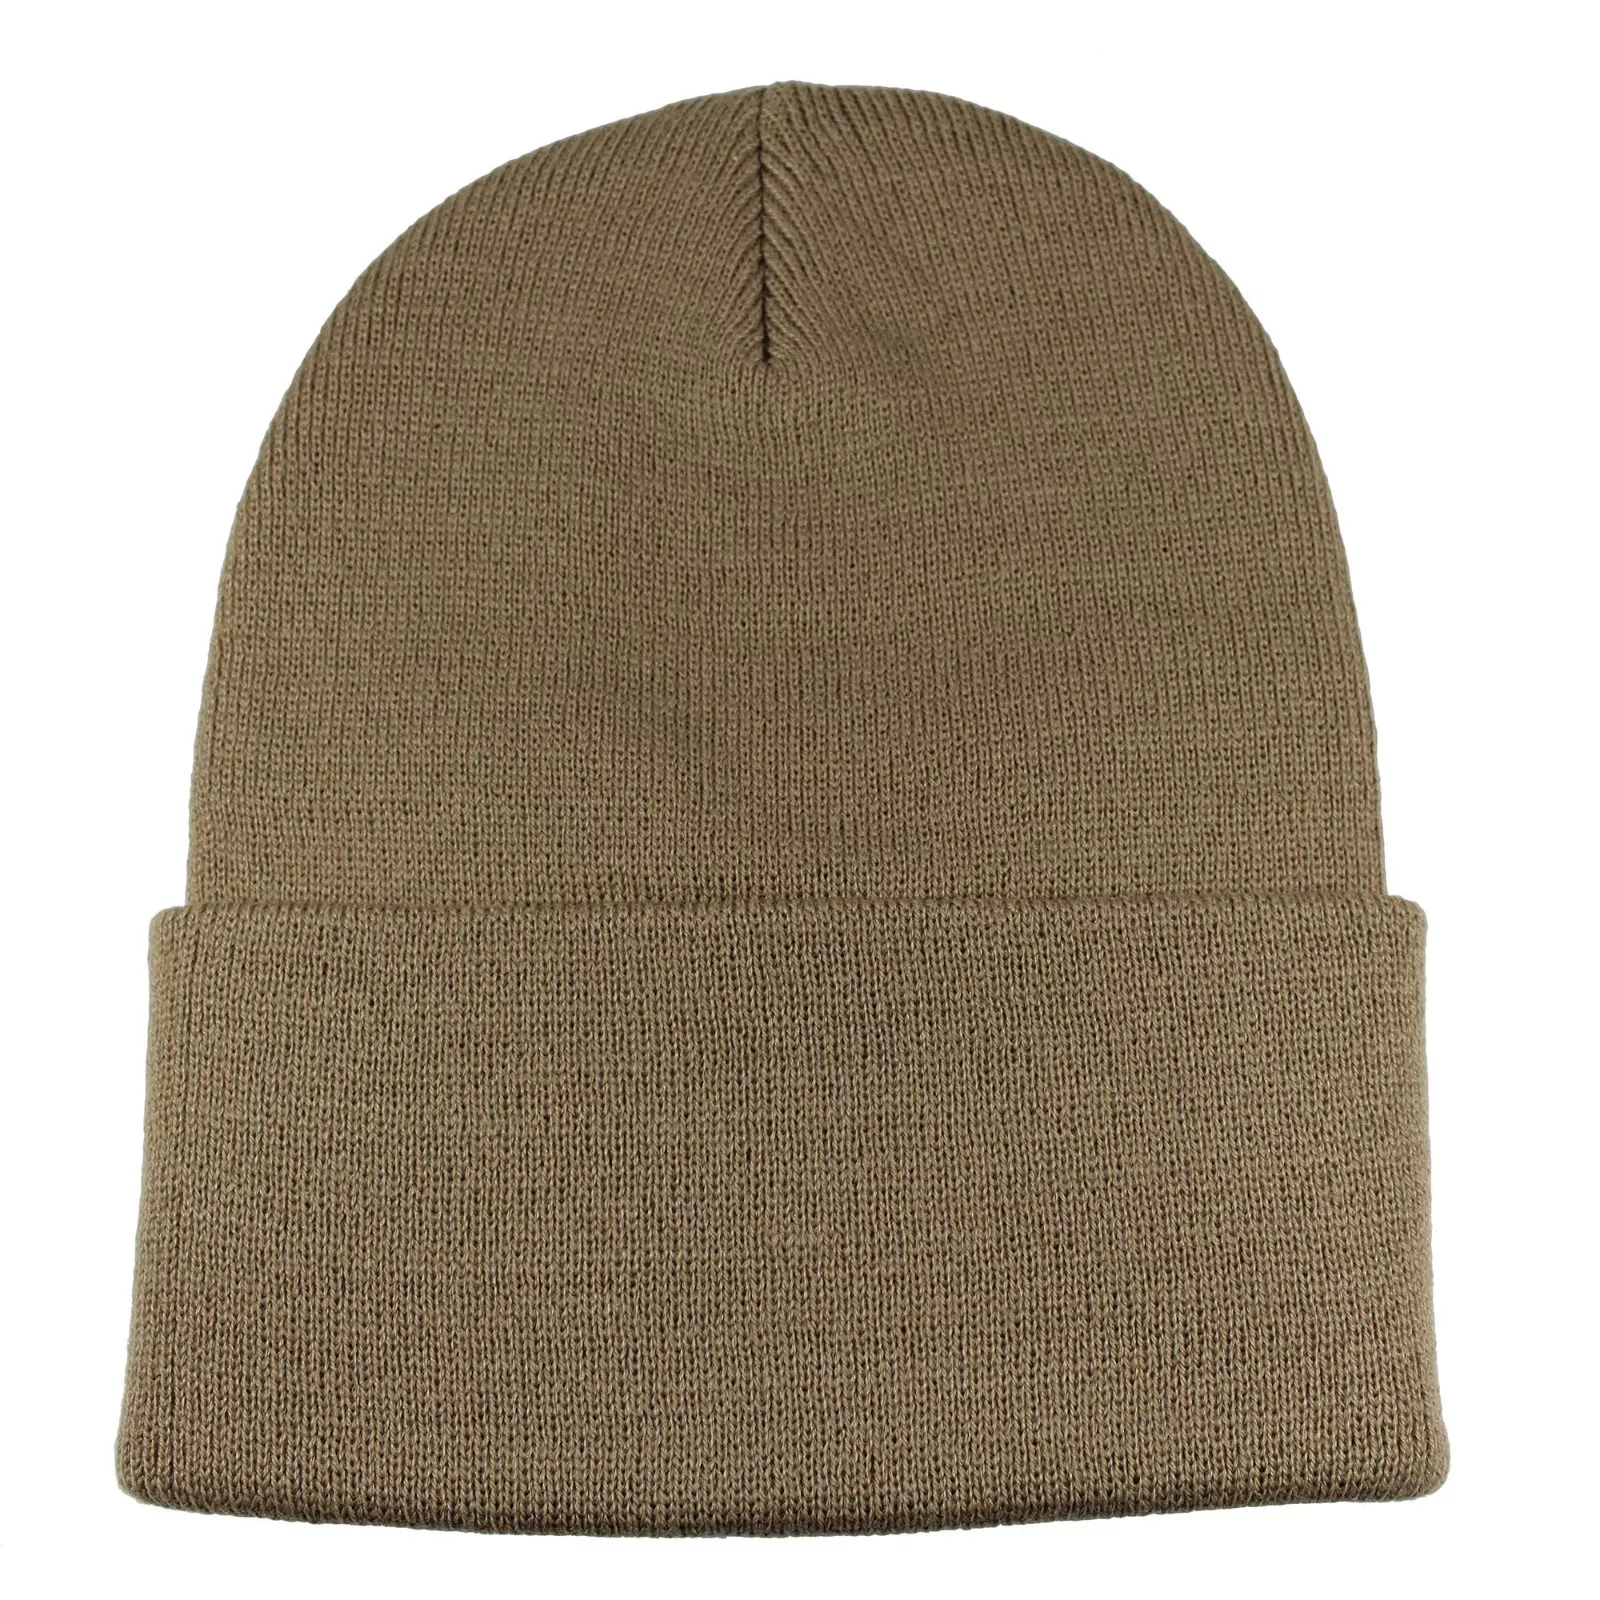 Unisex Plain Warm Knit Beanie Hat Cuff Skull Ski Cap Khaki1pcs - $9.99